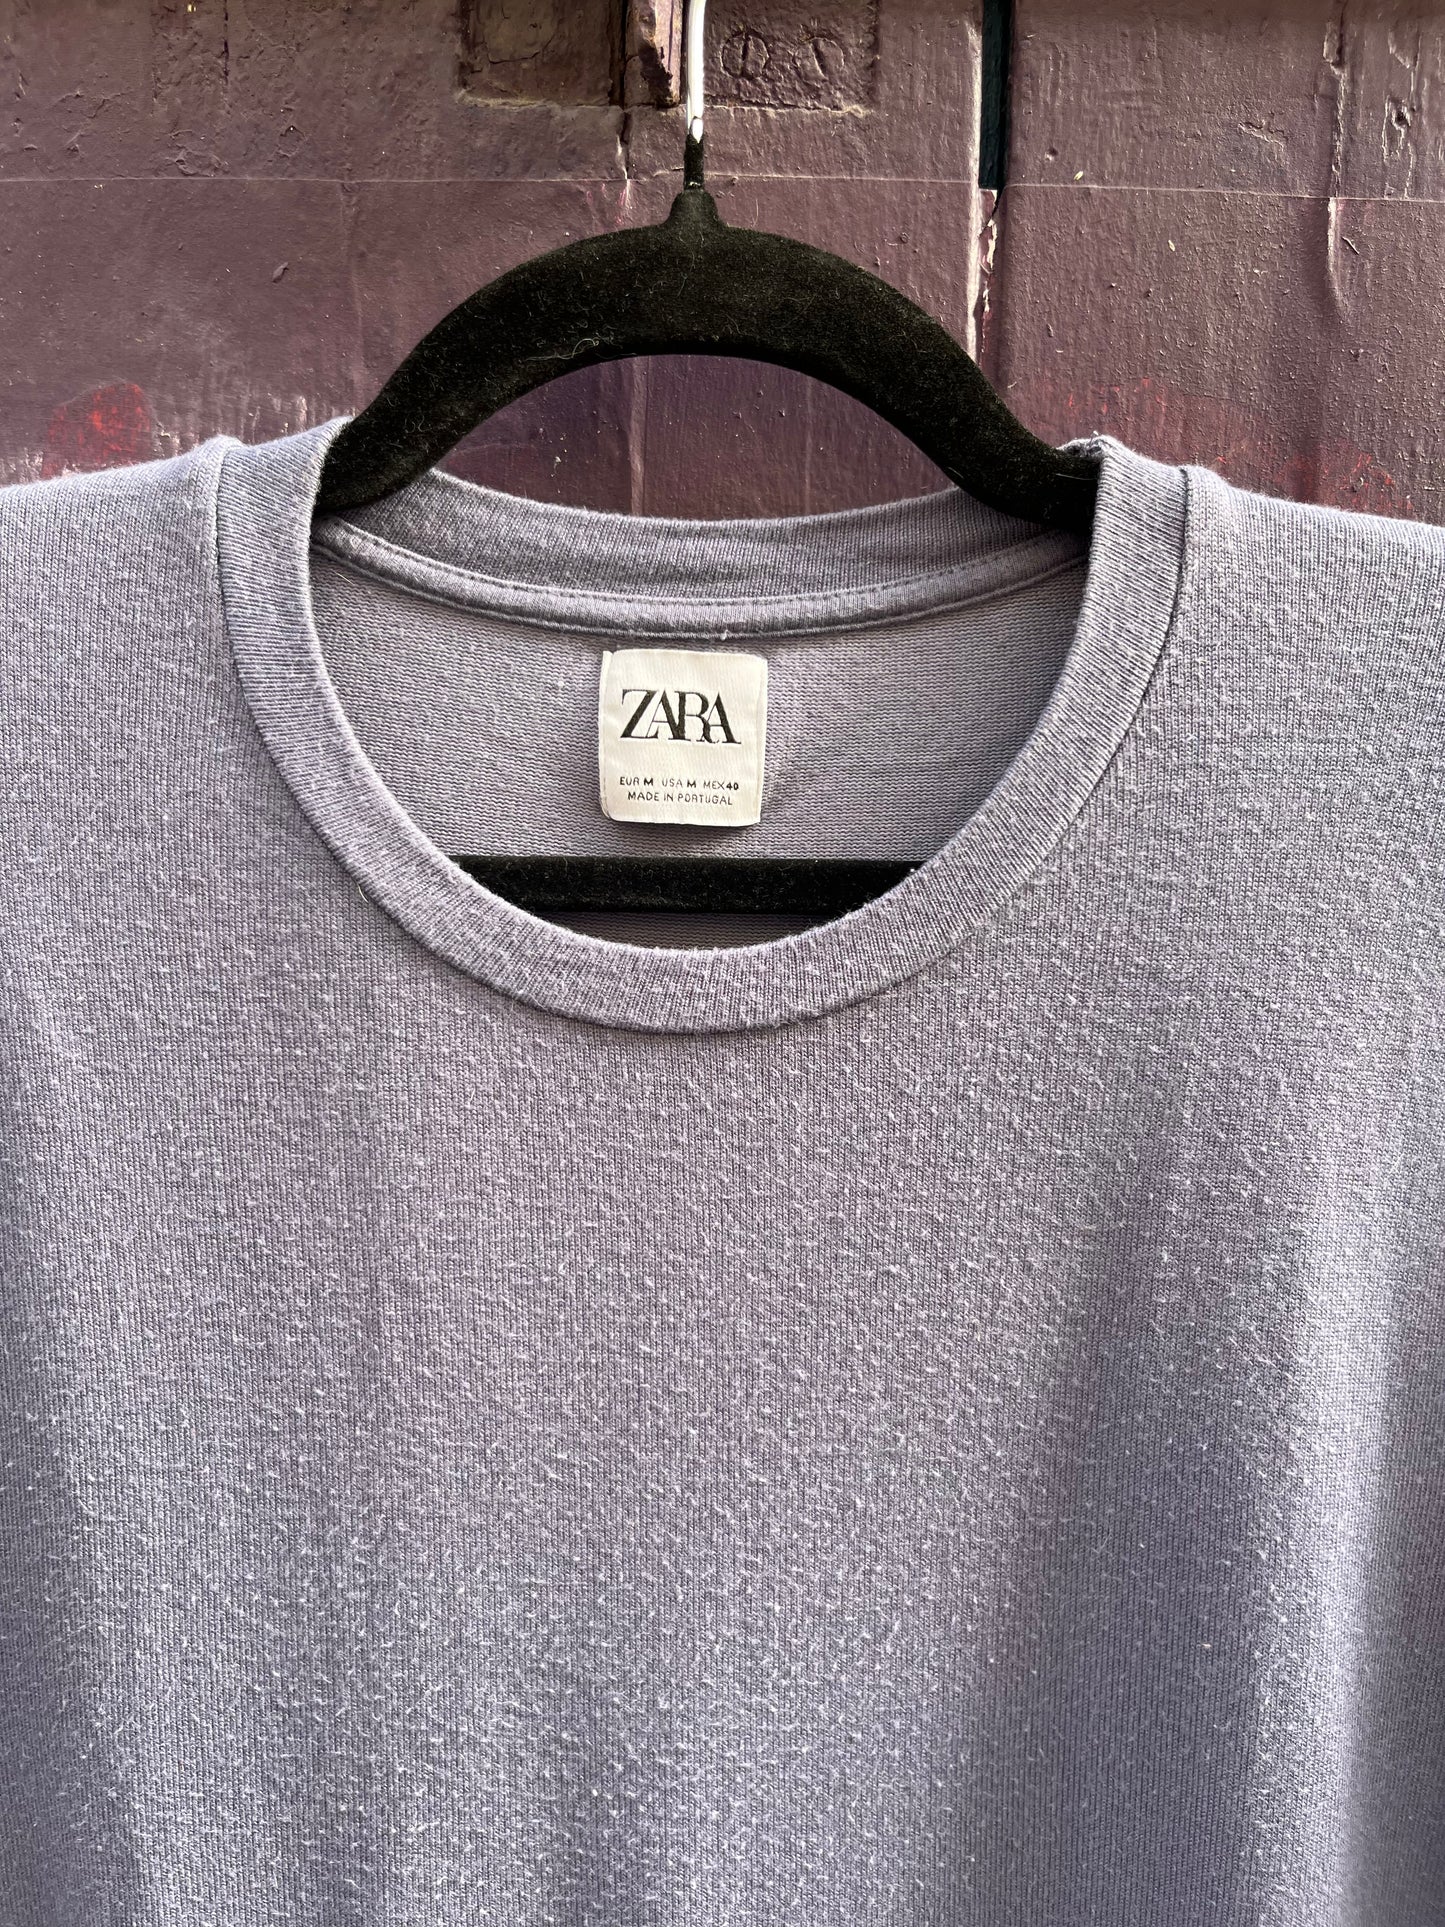 Le t-shirt, ZARA, taille 36-38